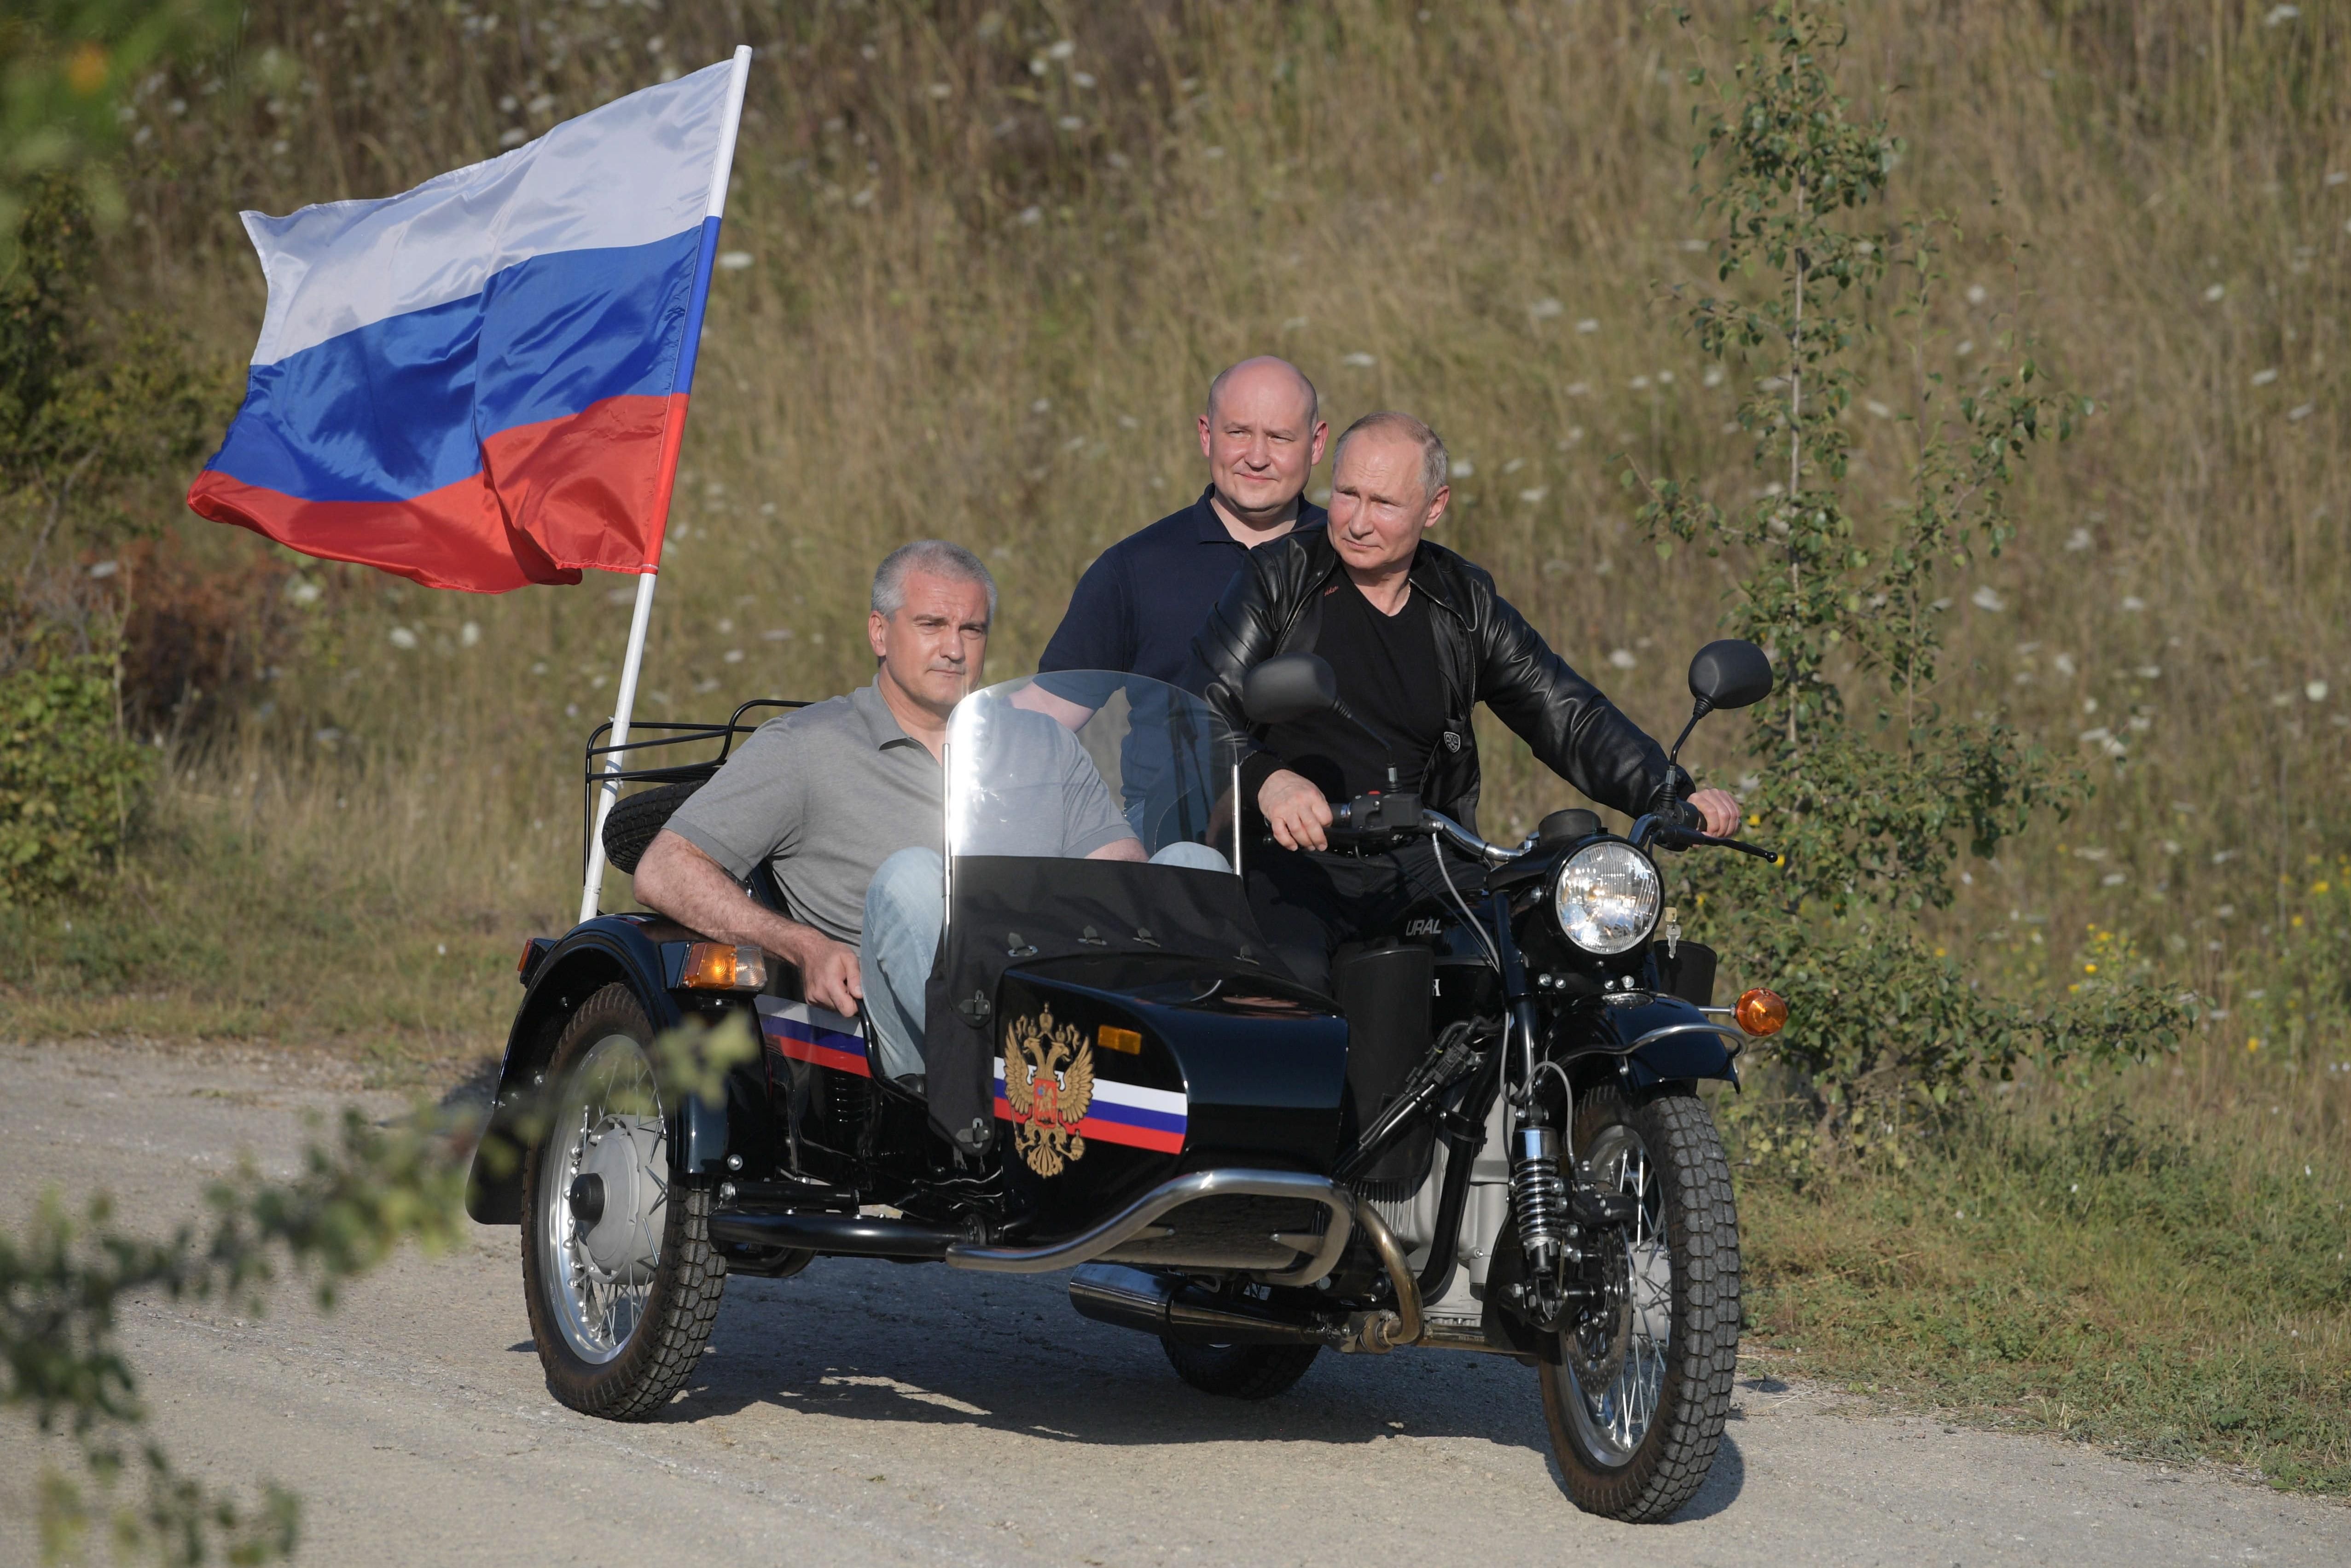 Путин на байк-шоу в Севастополе 2019 – фото и суть конфликта